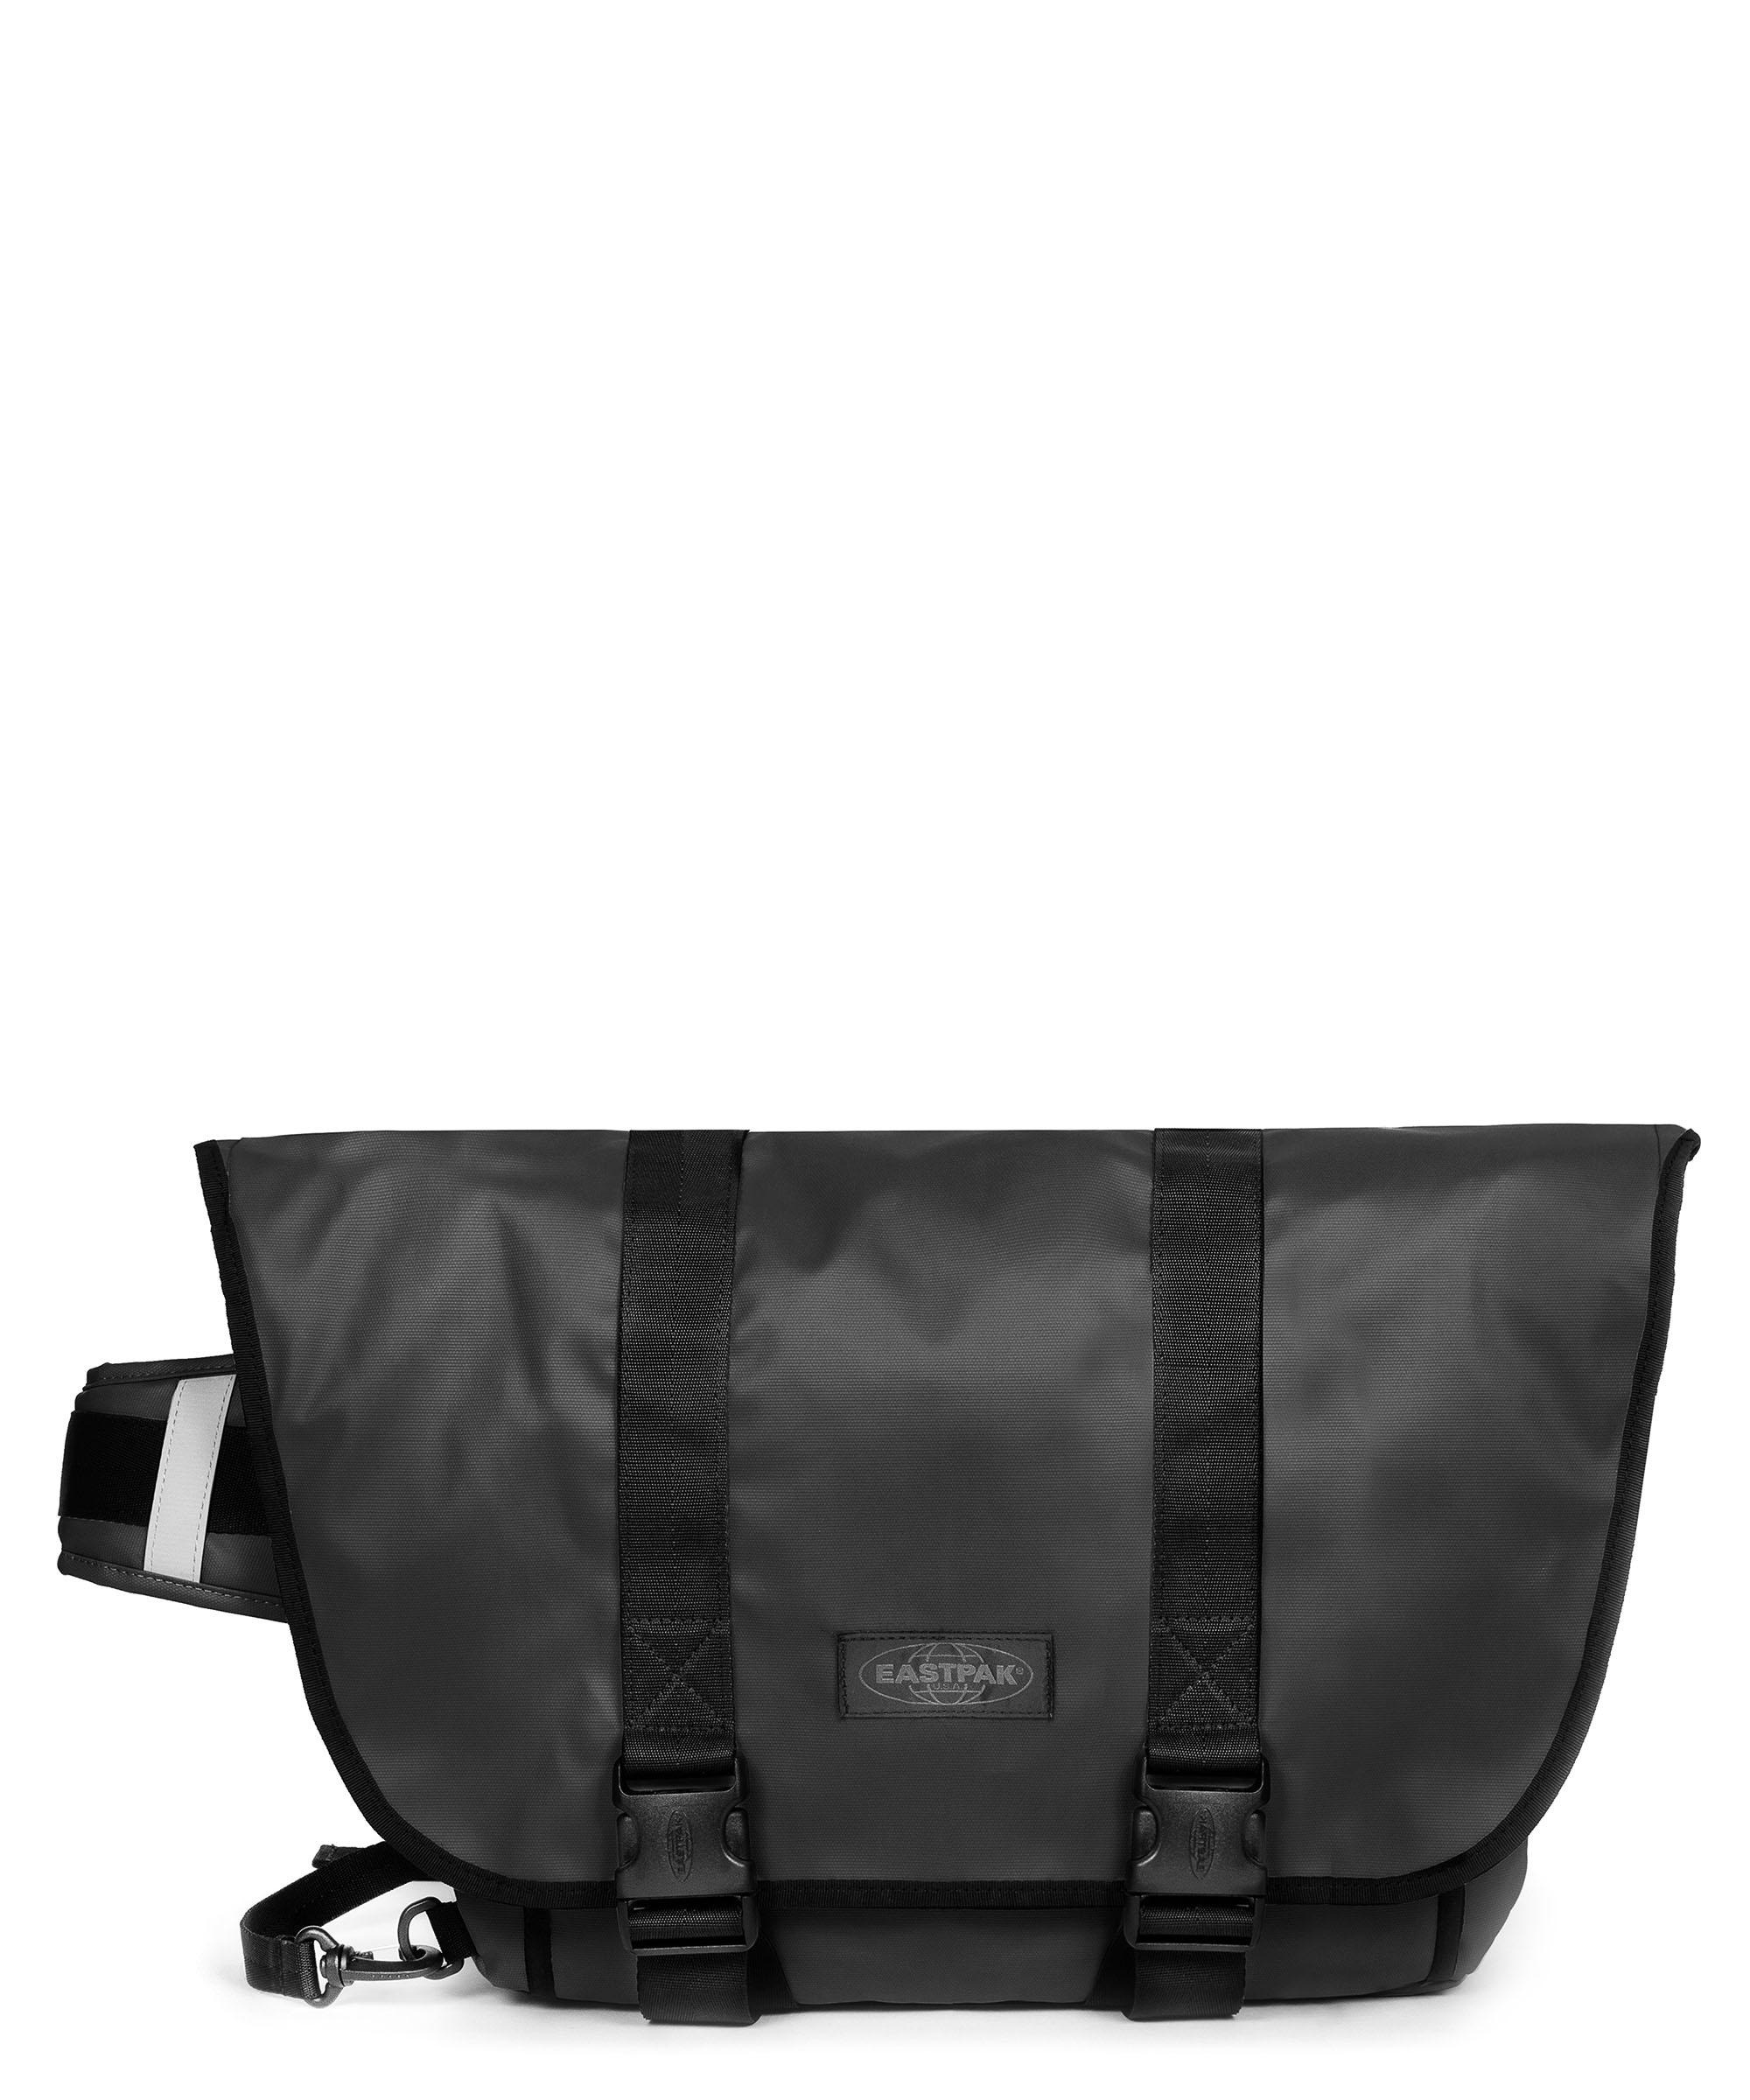 Eastpak X Kris Van Assche Designer Crossbody Leather Bag Rolltop Messenger  Black | eBay